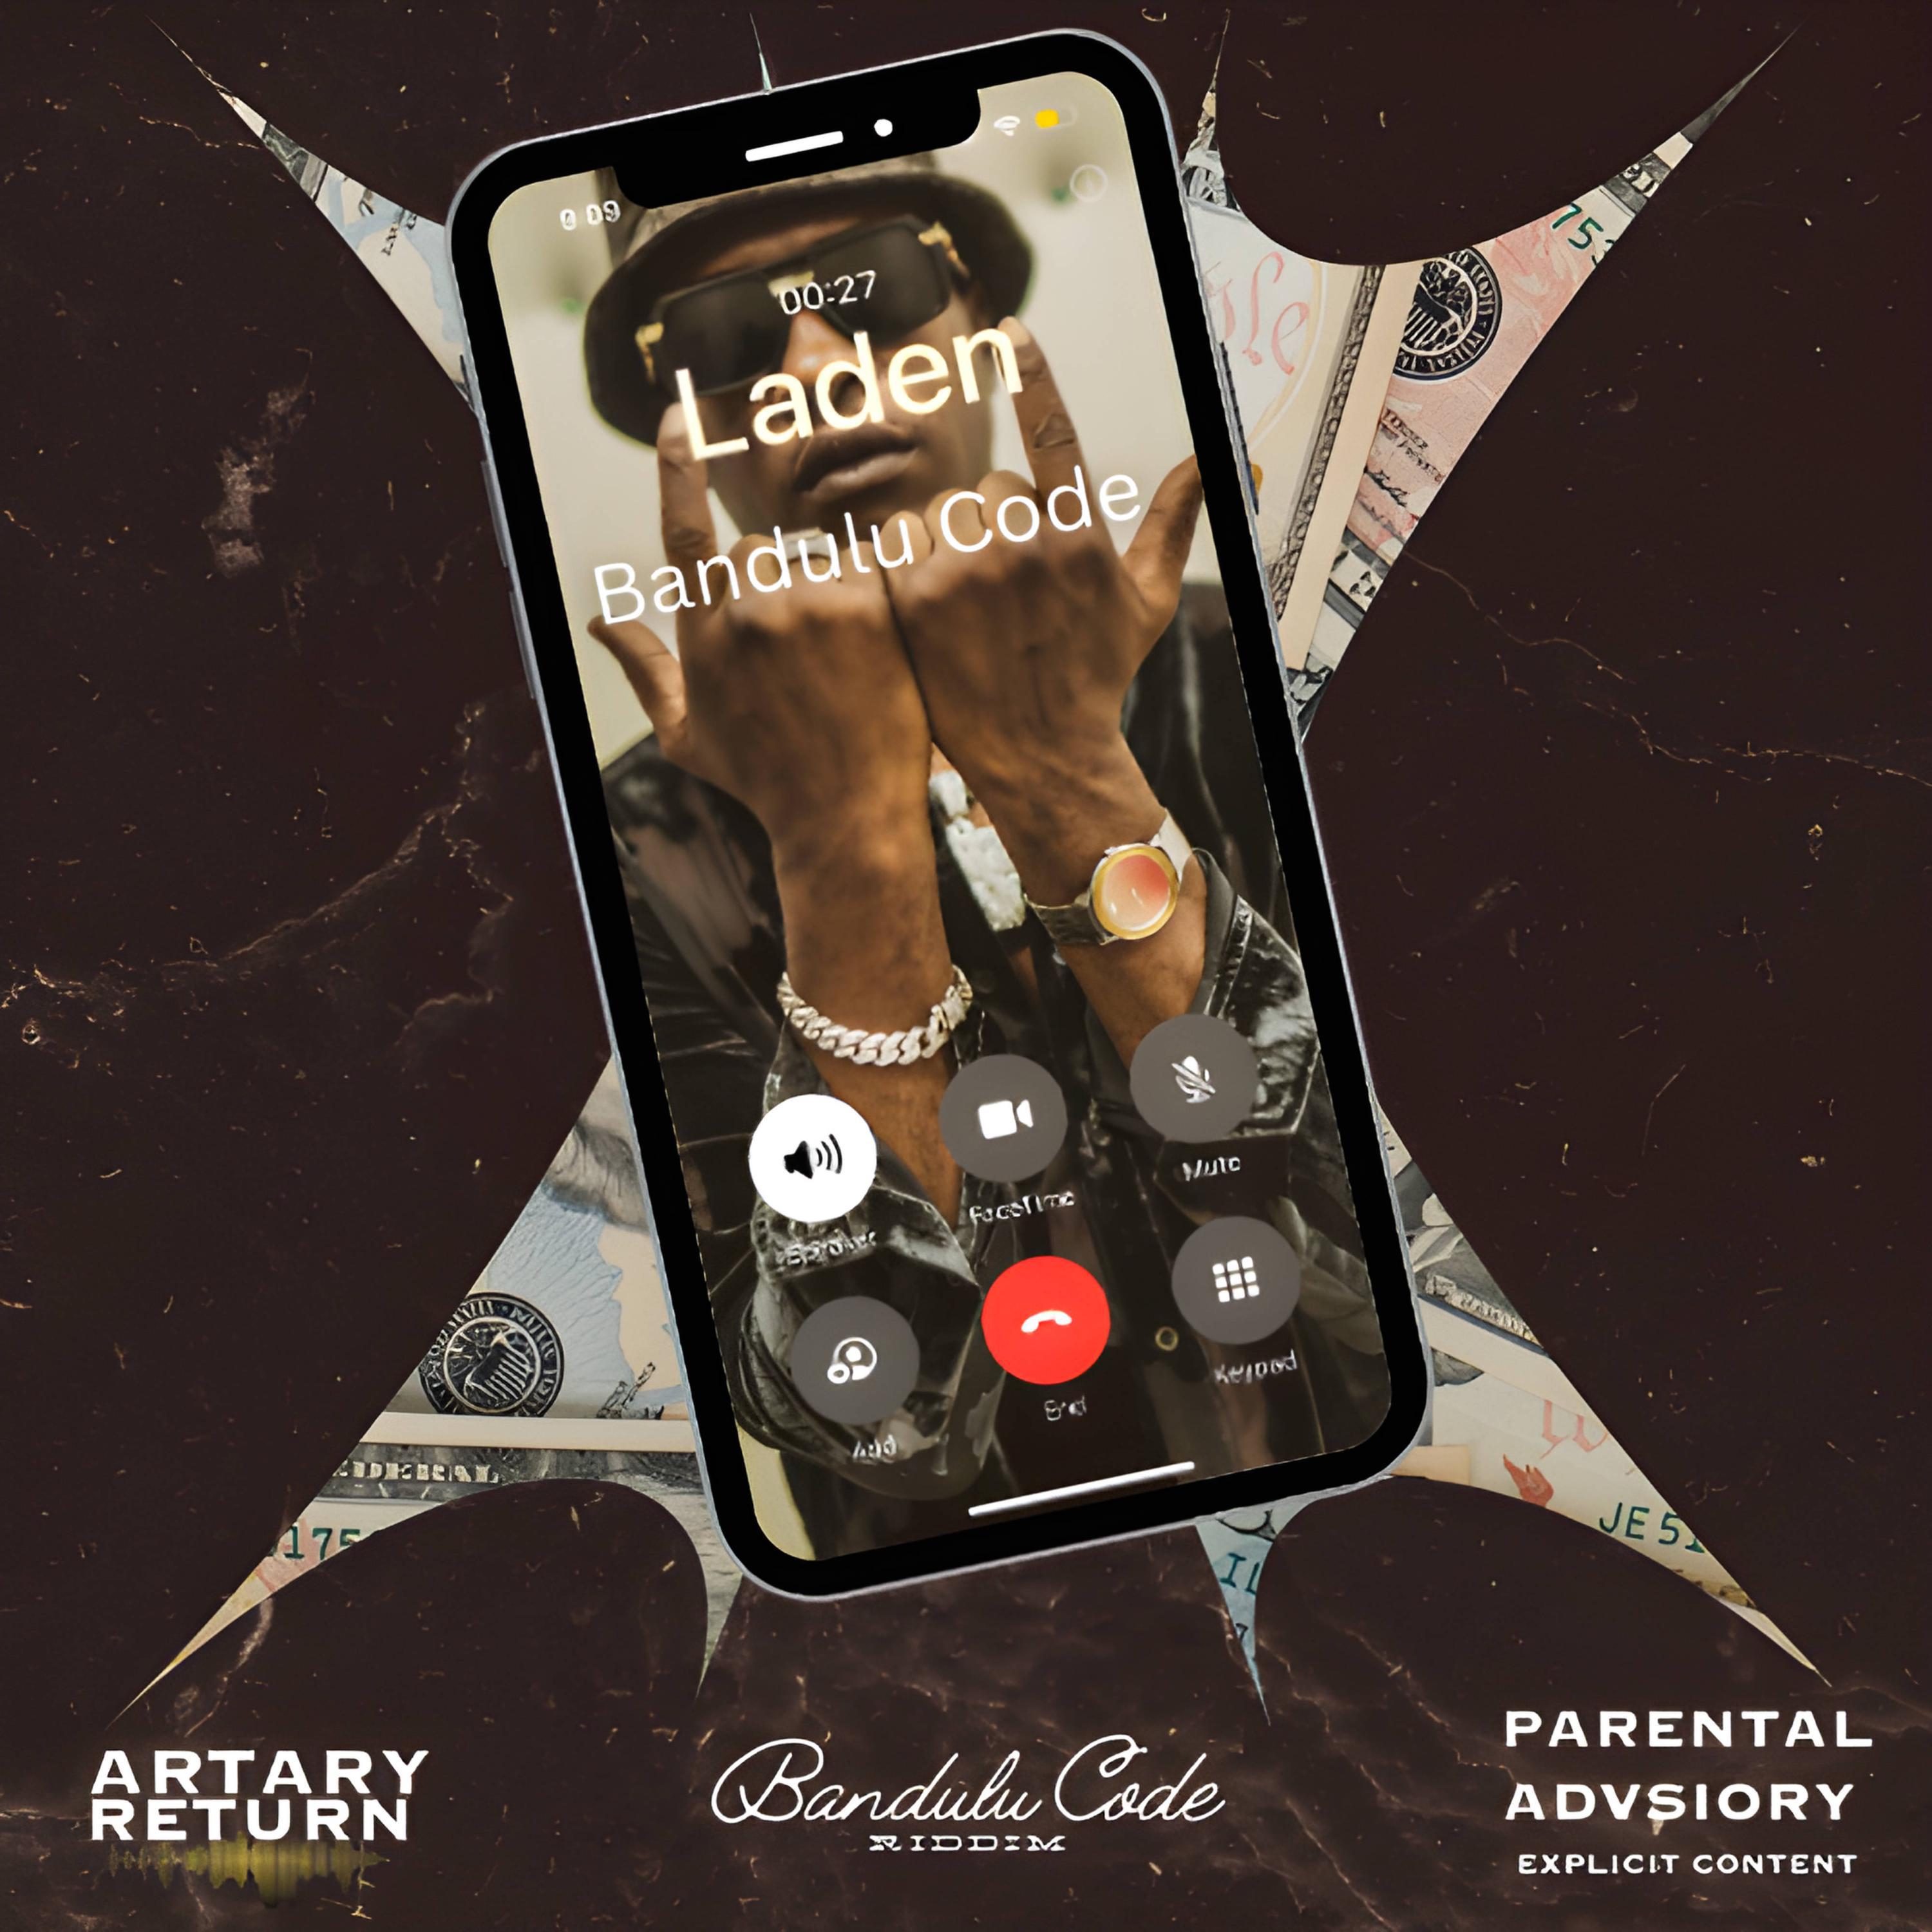 Laden - Bandulu Code (feat. Artary Return) (Radio Edit)